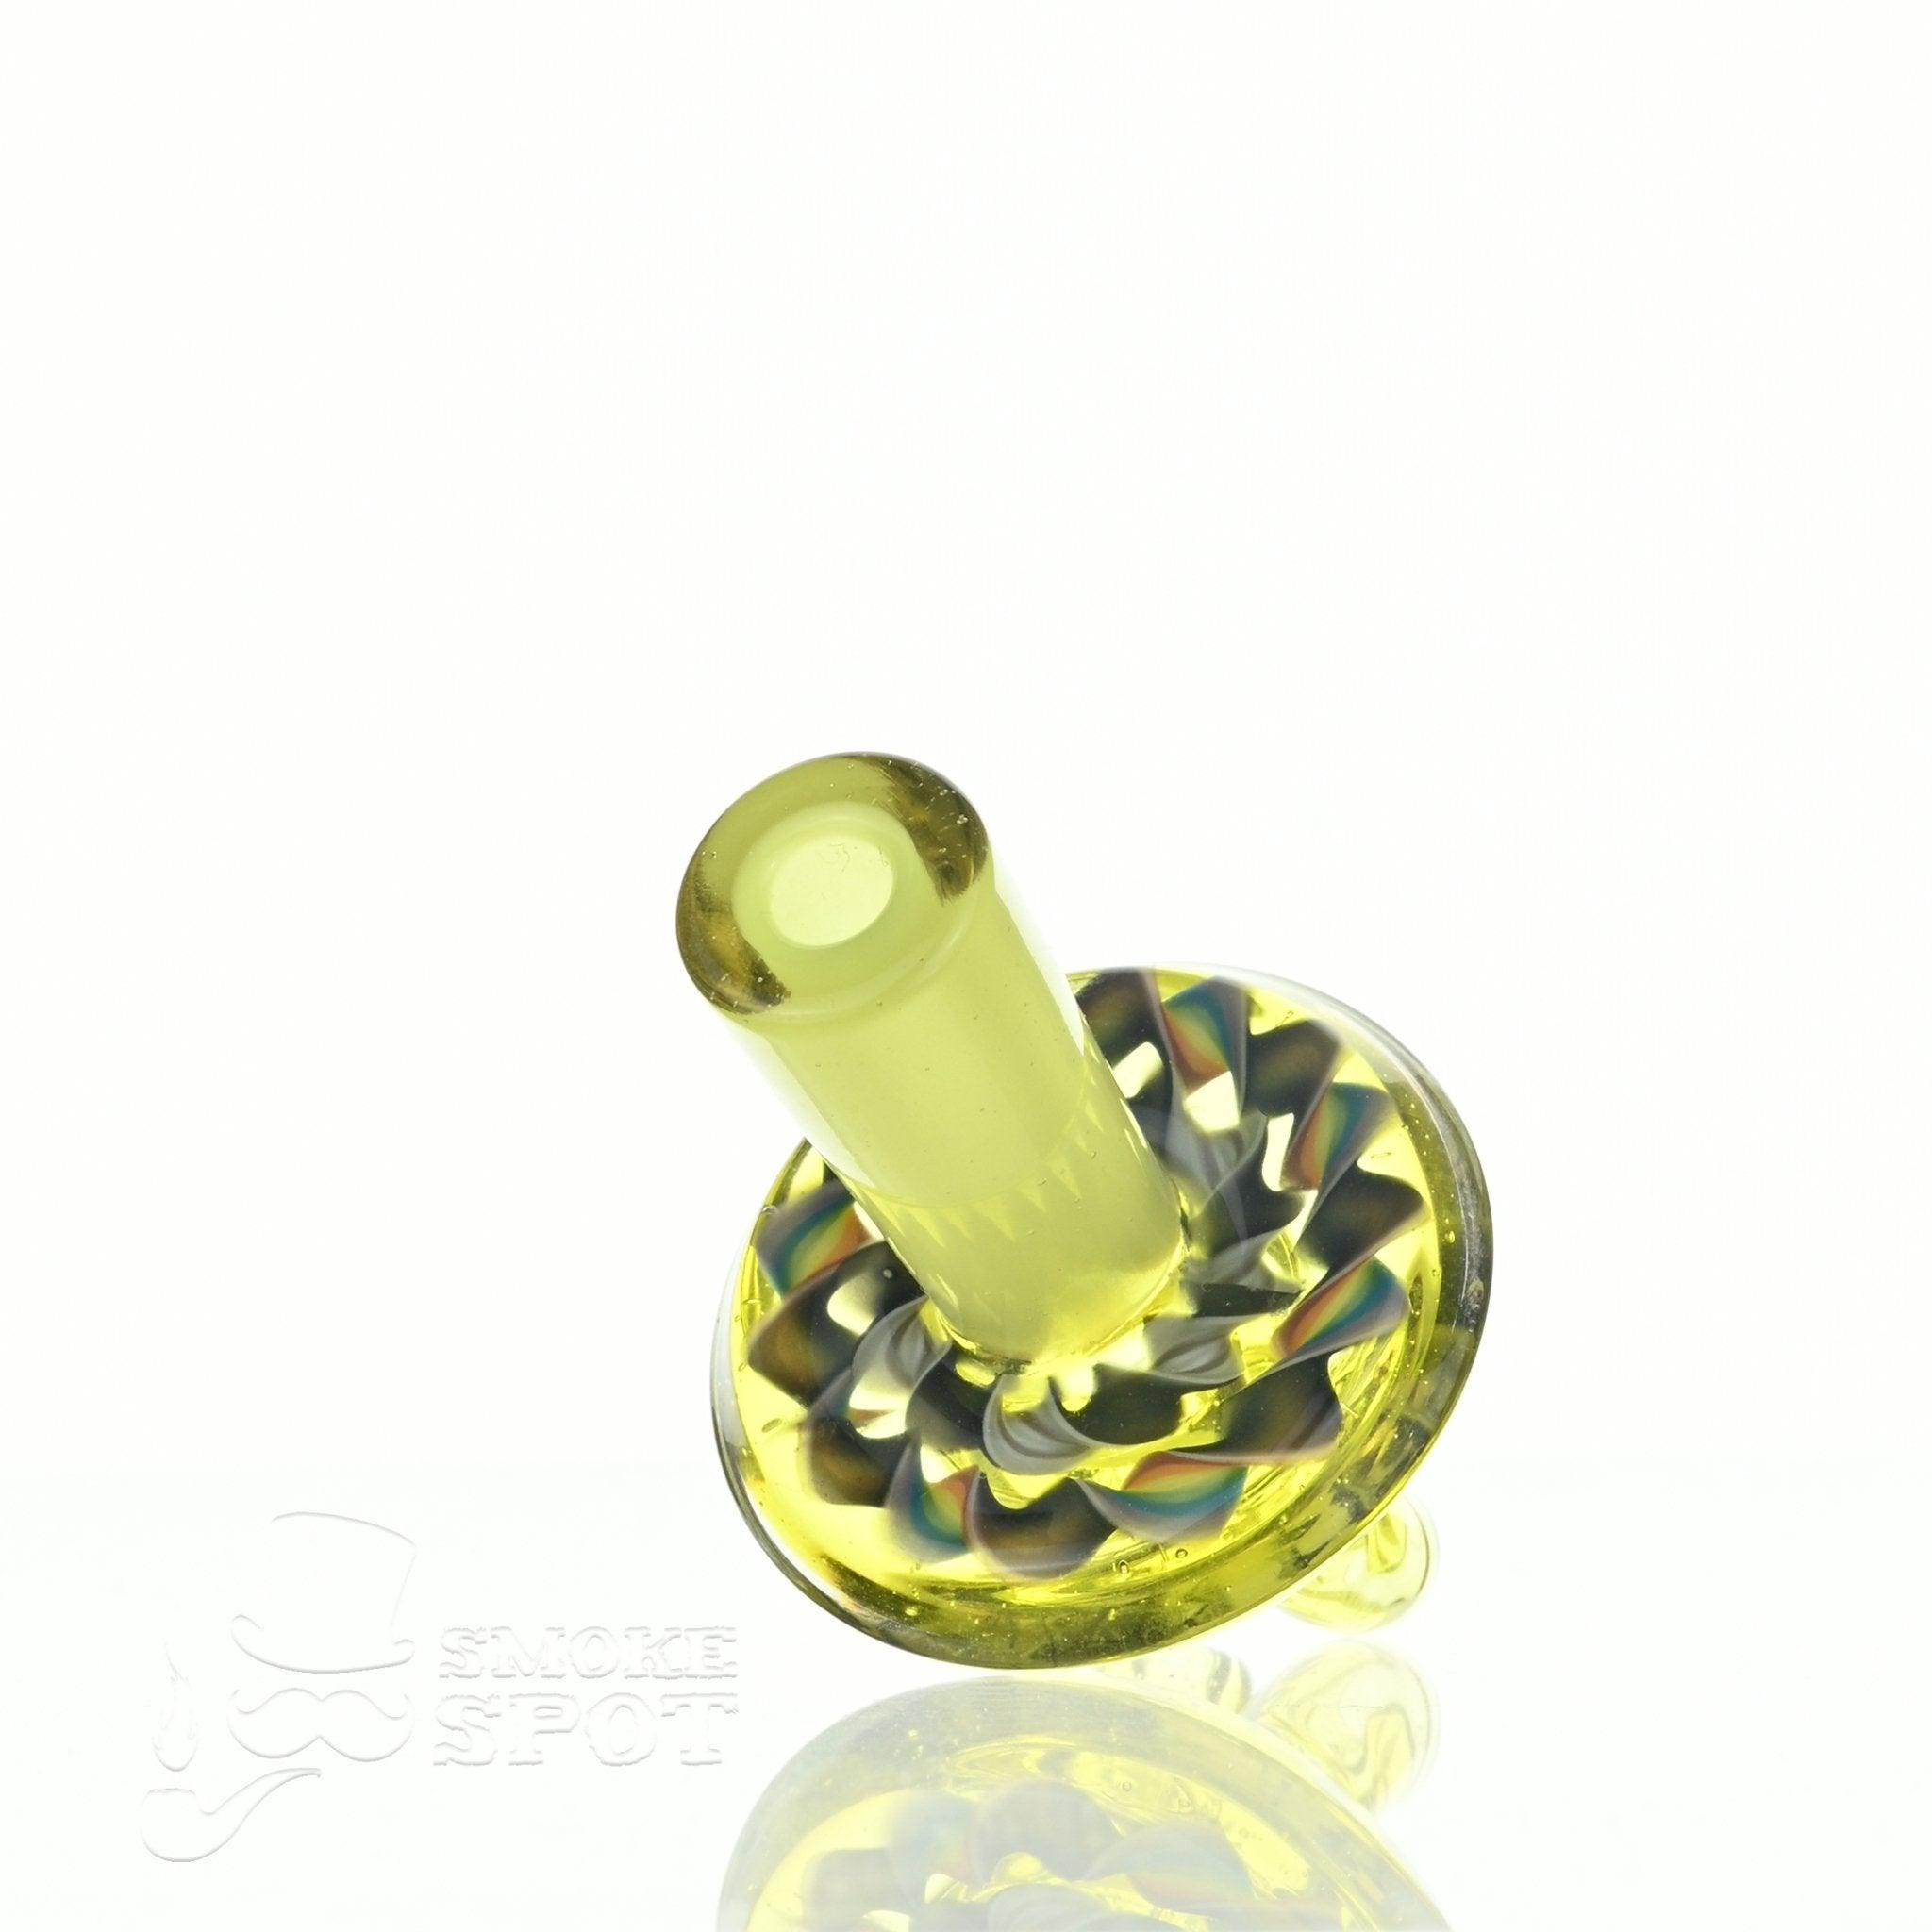 C-lanni Glass Accessories C-Lanni Lemon Lime x Brozay spinner cap